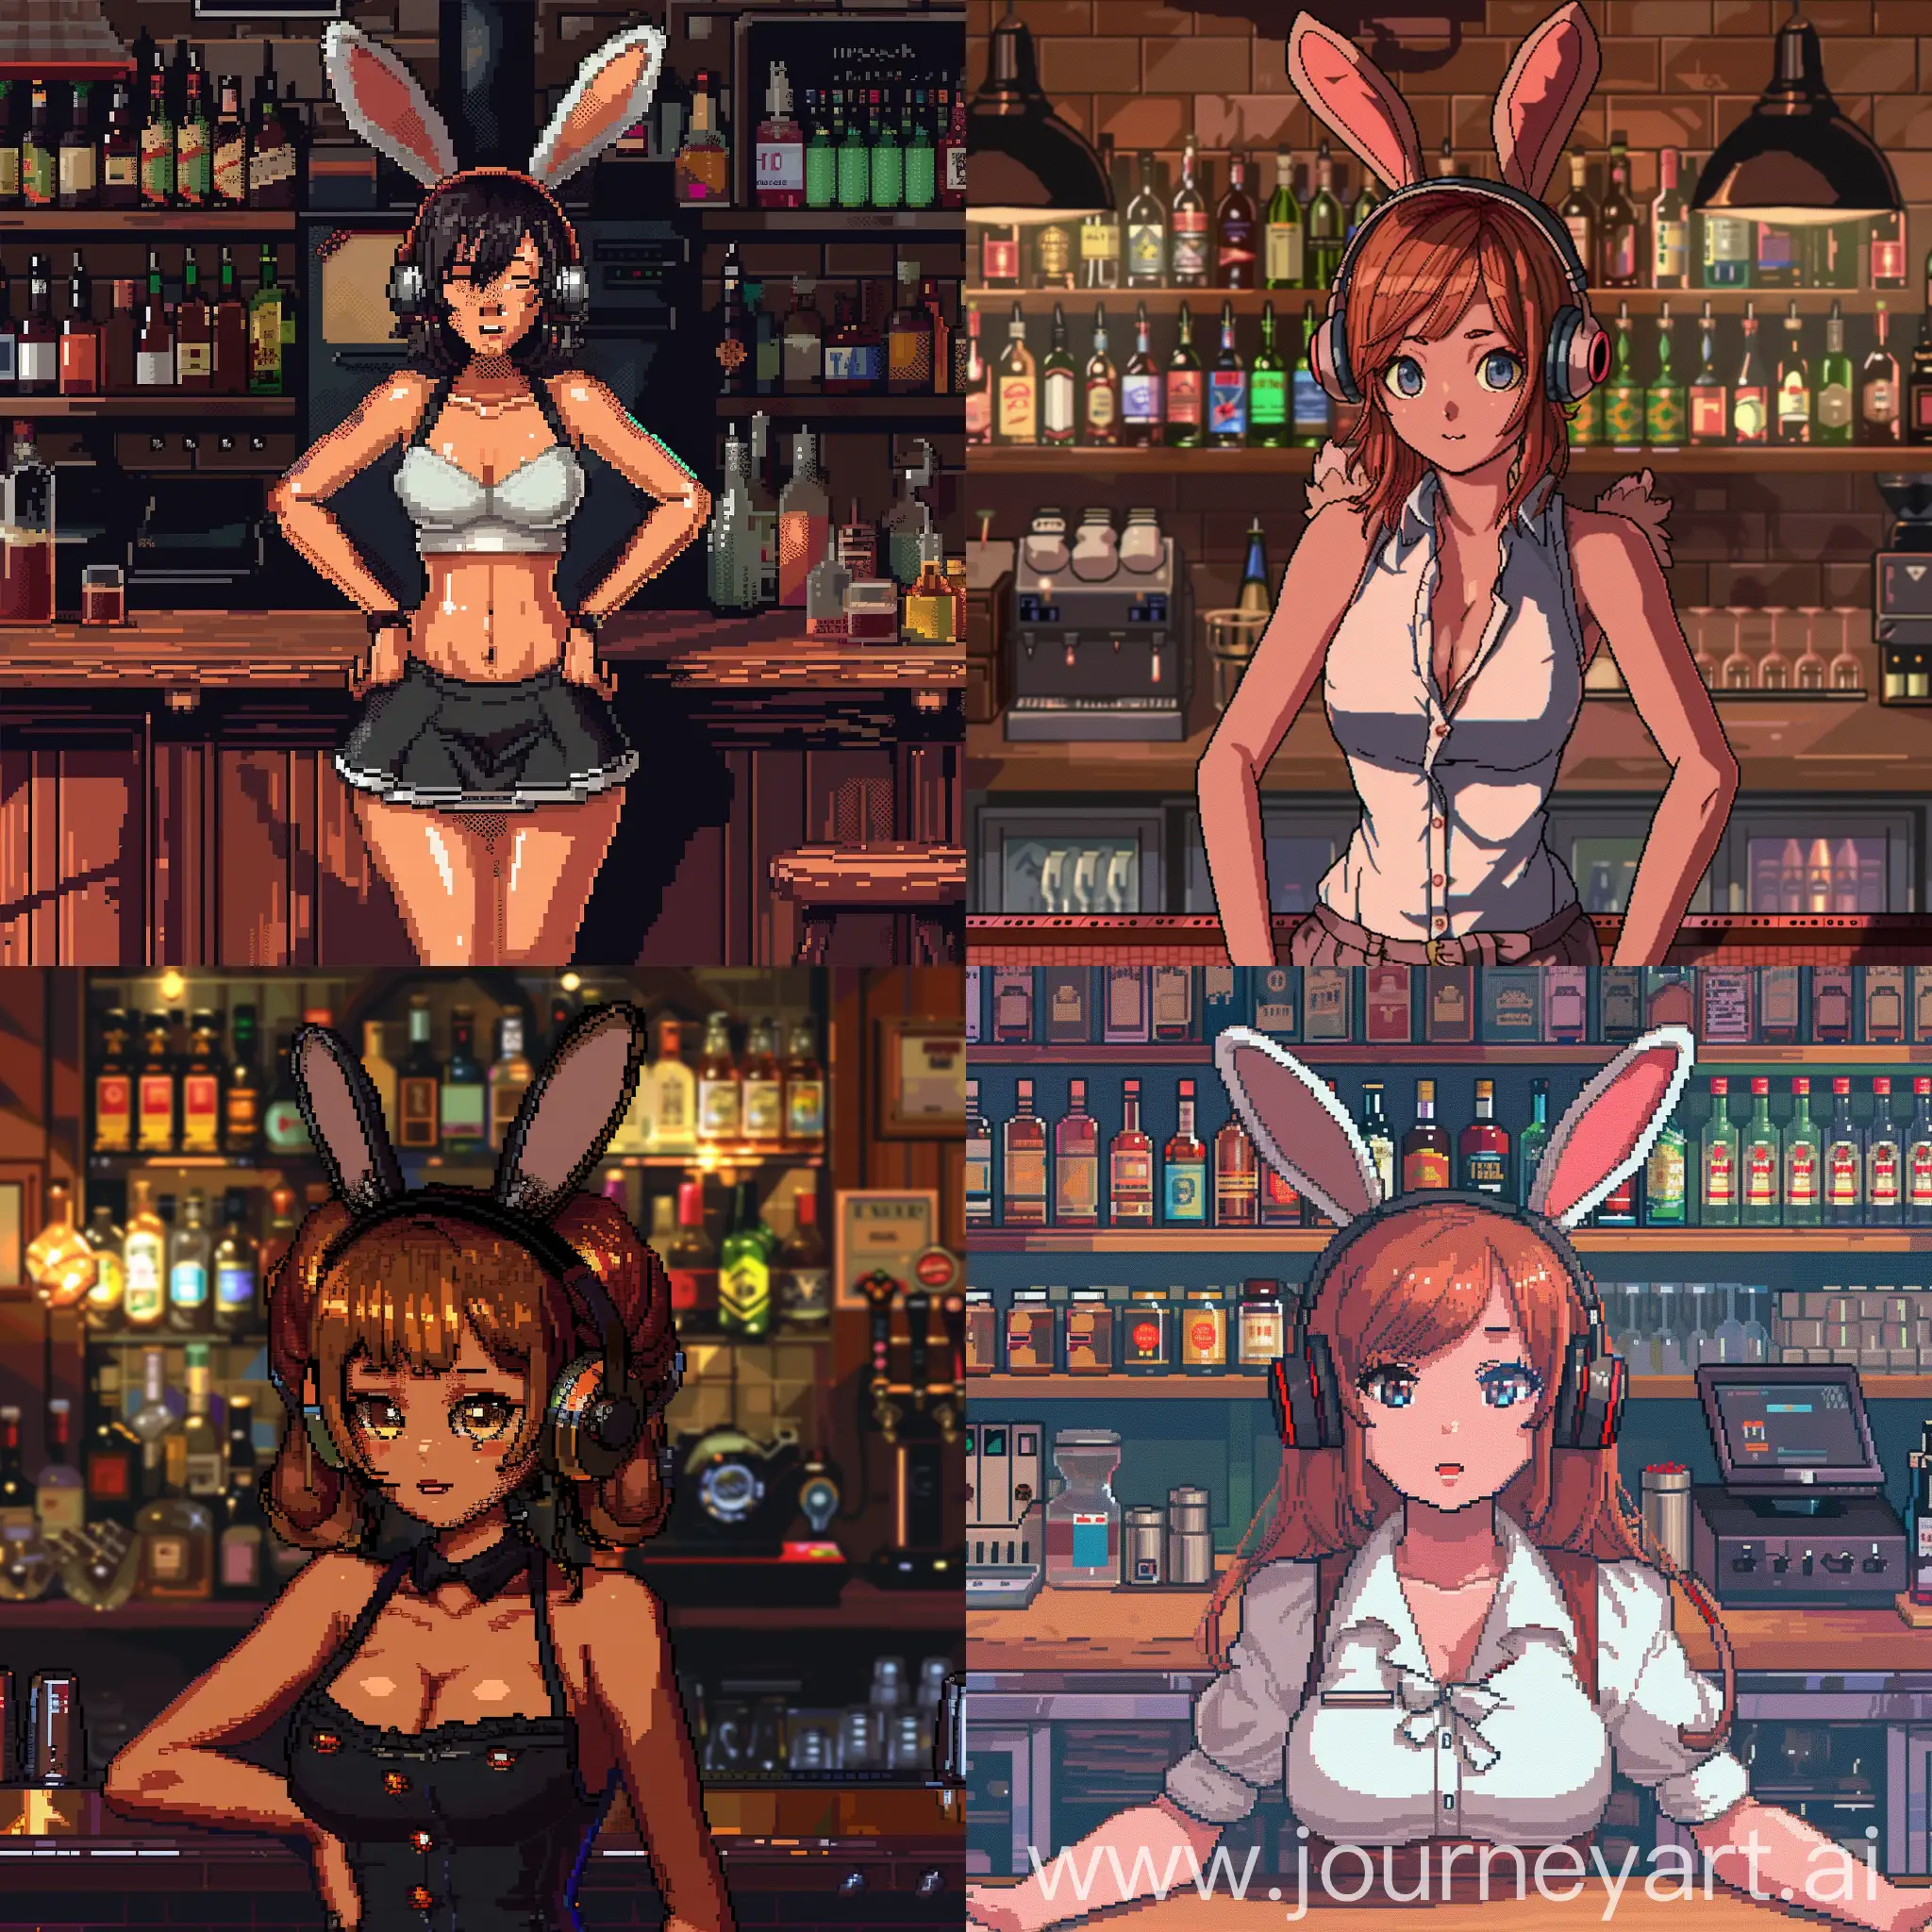 Pixel-Art-Anime-Girl-Bartender-with-Bunny-Headphones